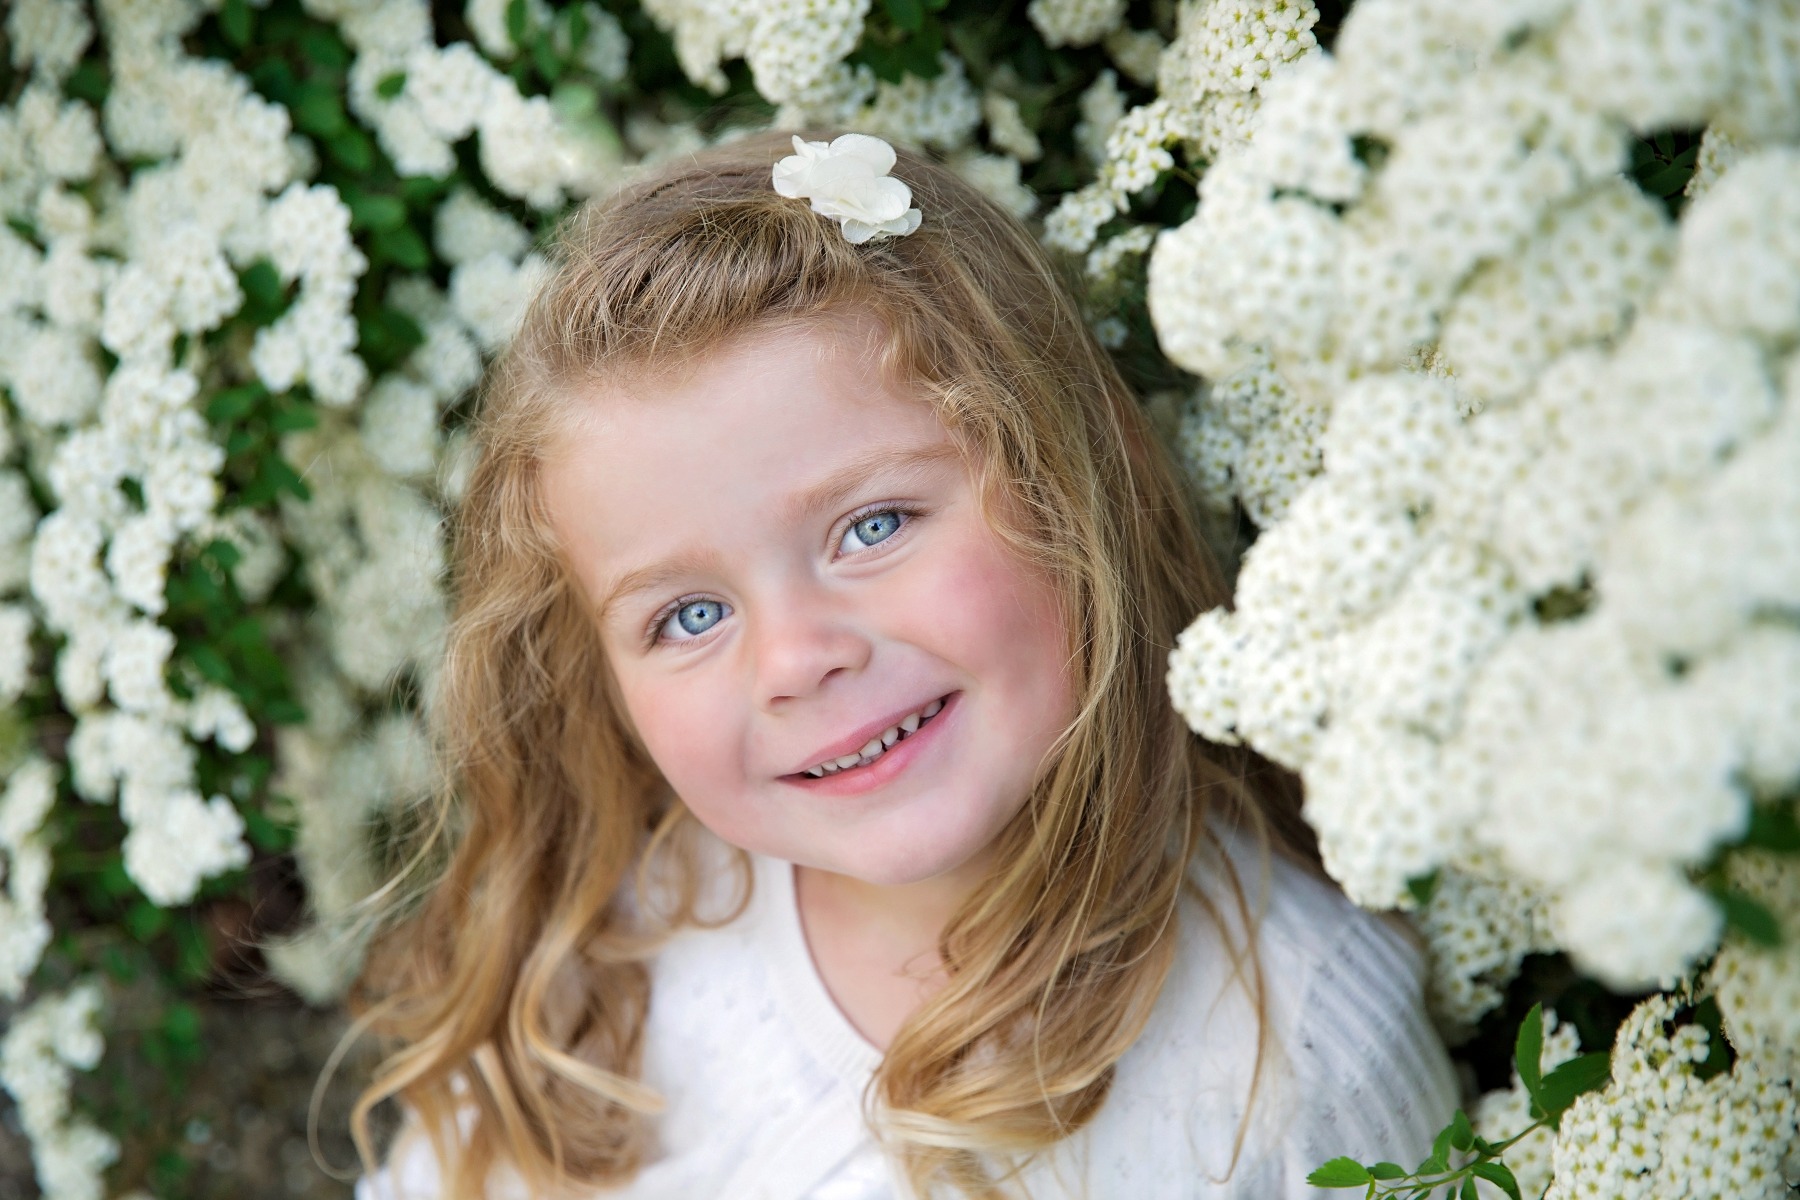 blond toddler smiles in front of white flowering bush